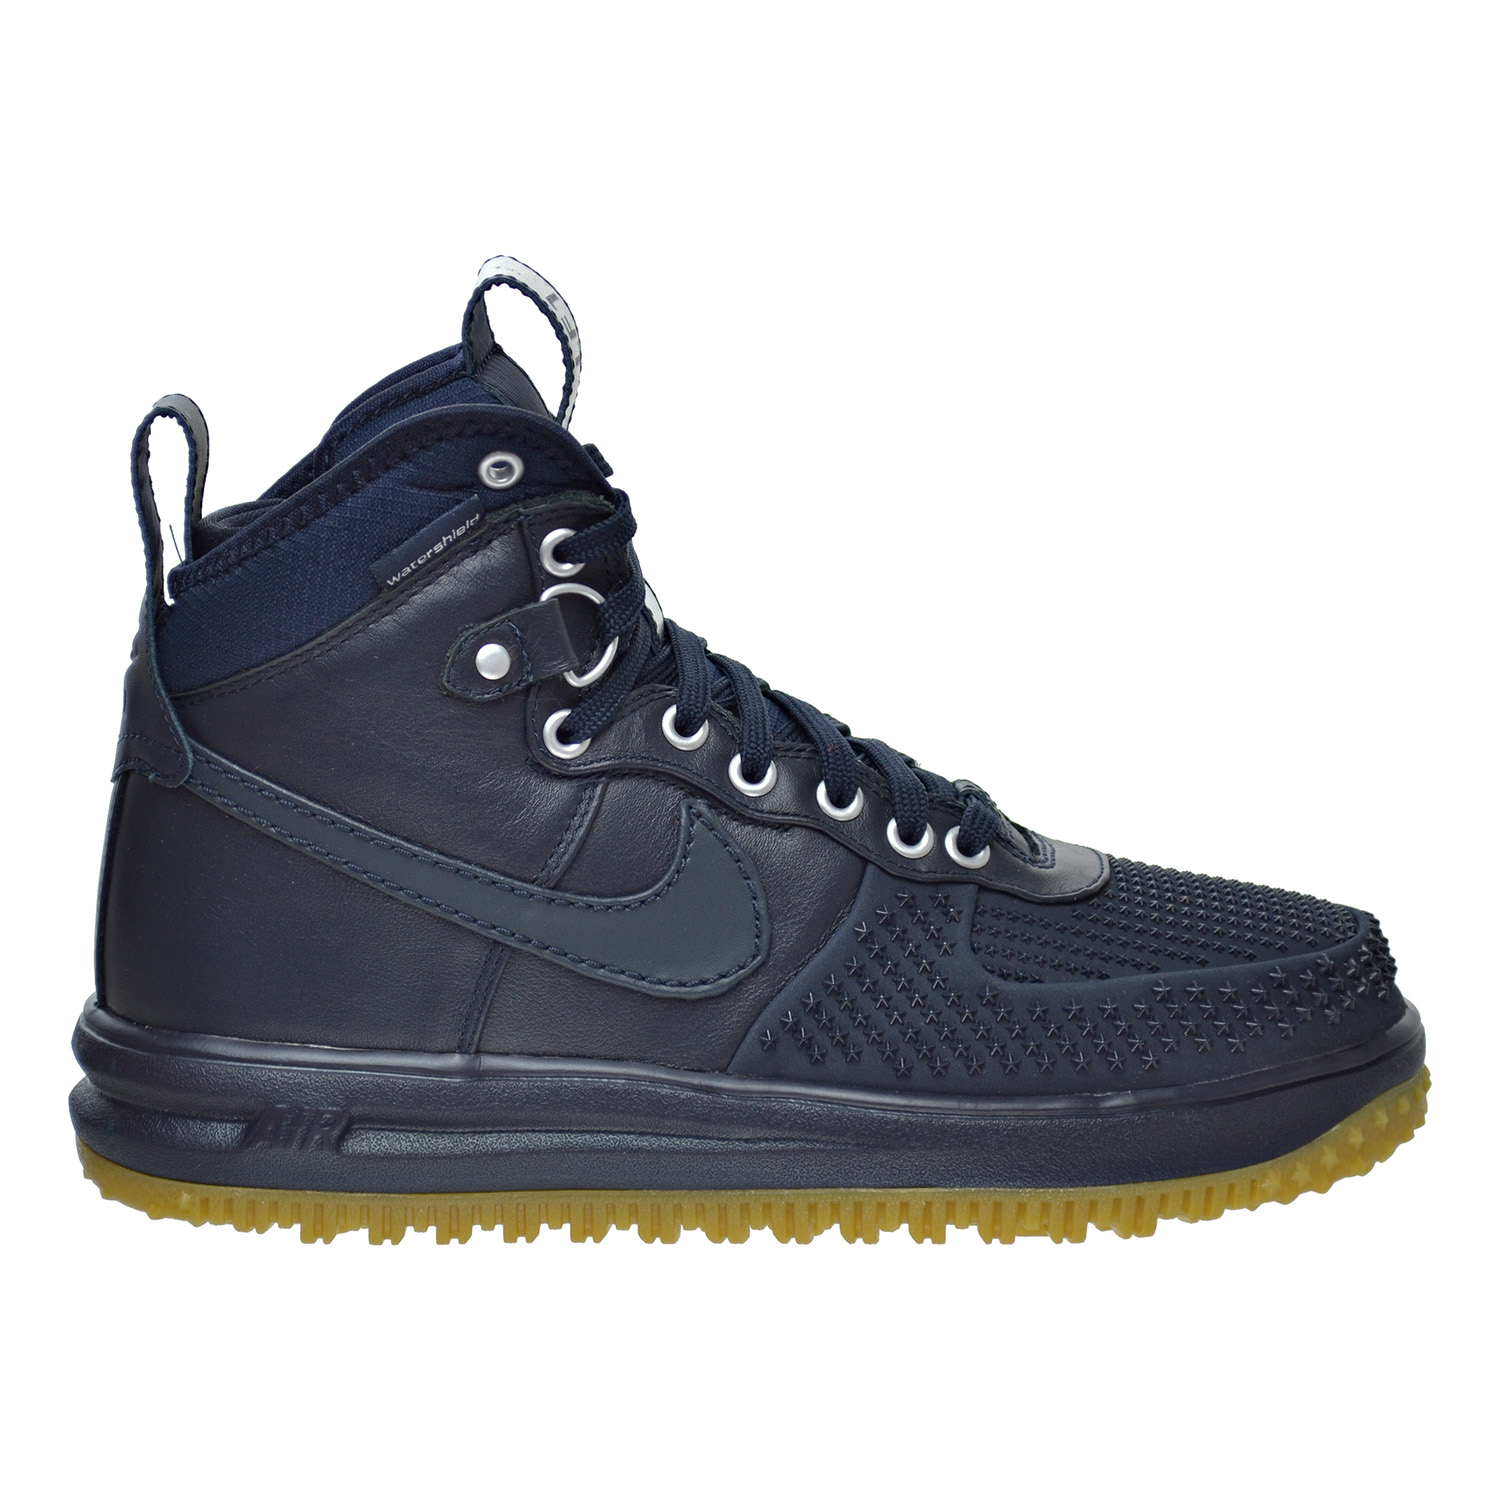 Nike Lunar Force 1 Duckboot Men's Shoes 